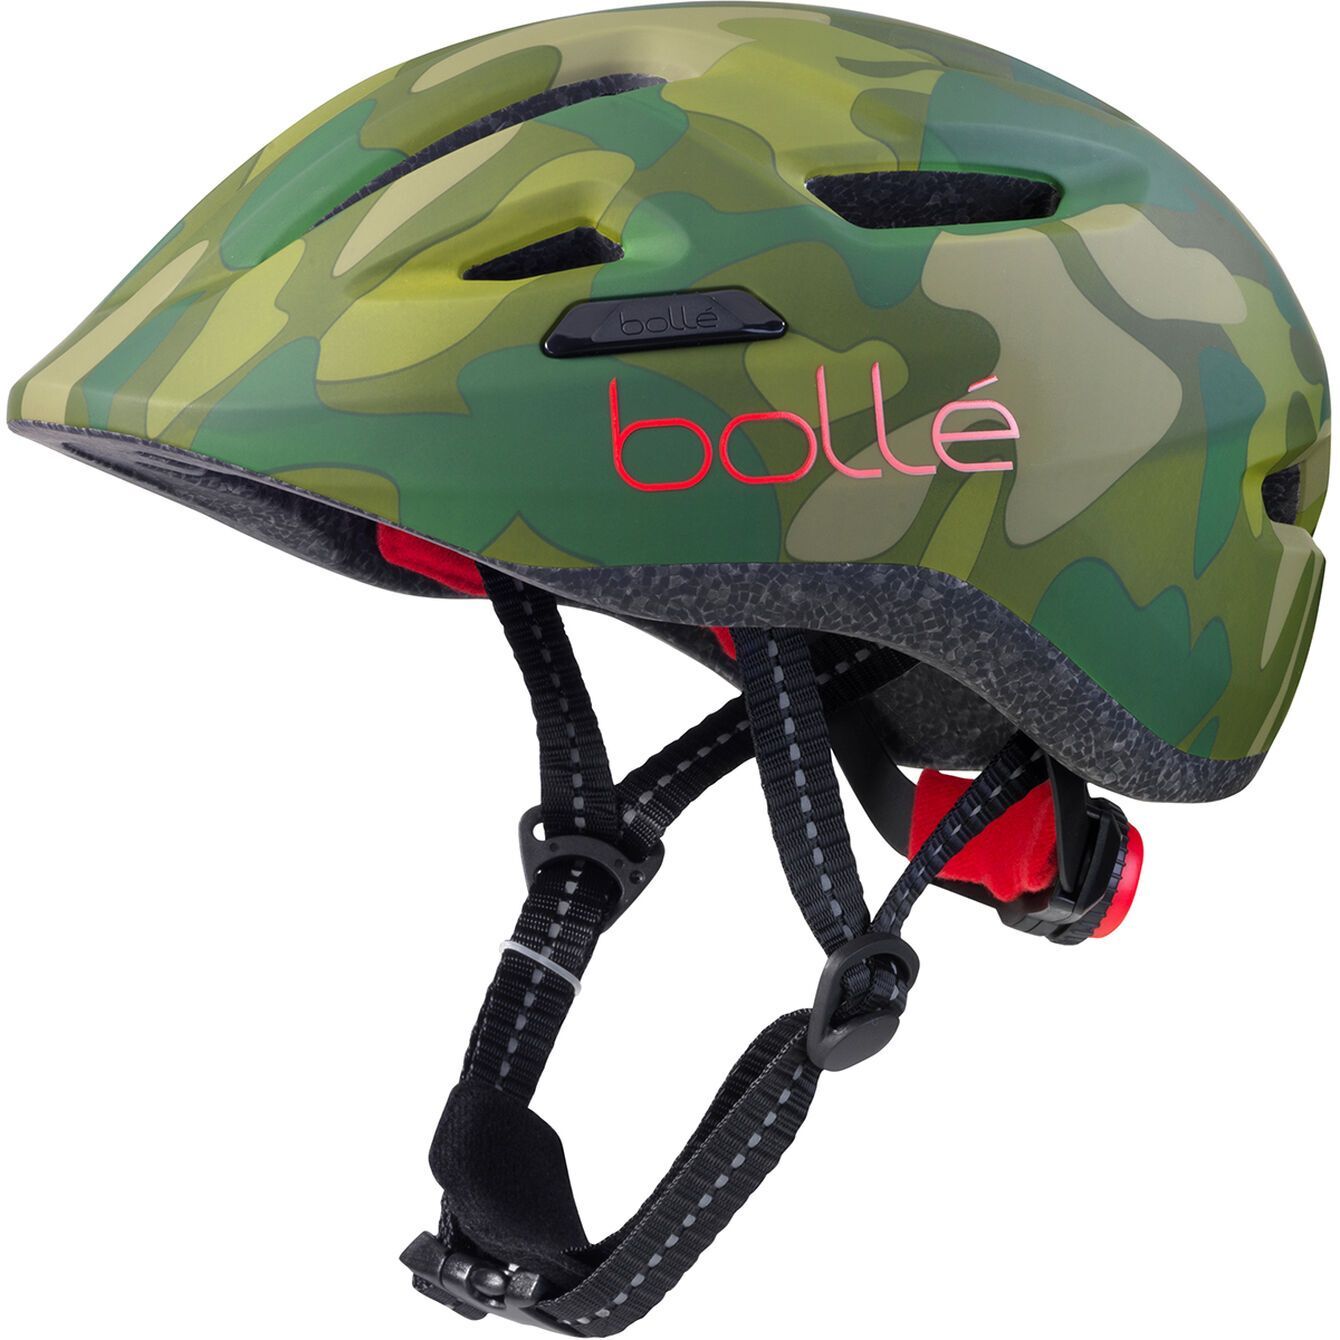 Bollé Stance Jr - Cycling helmet - Kids